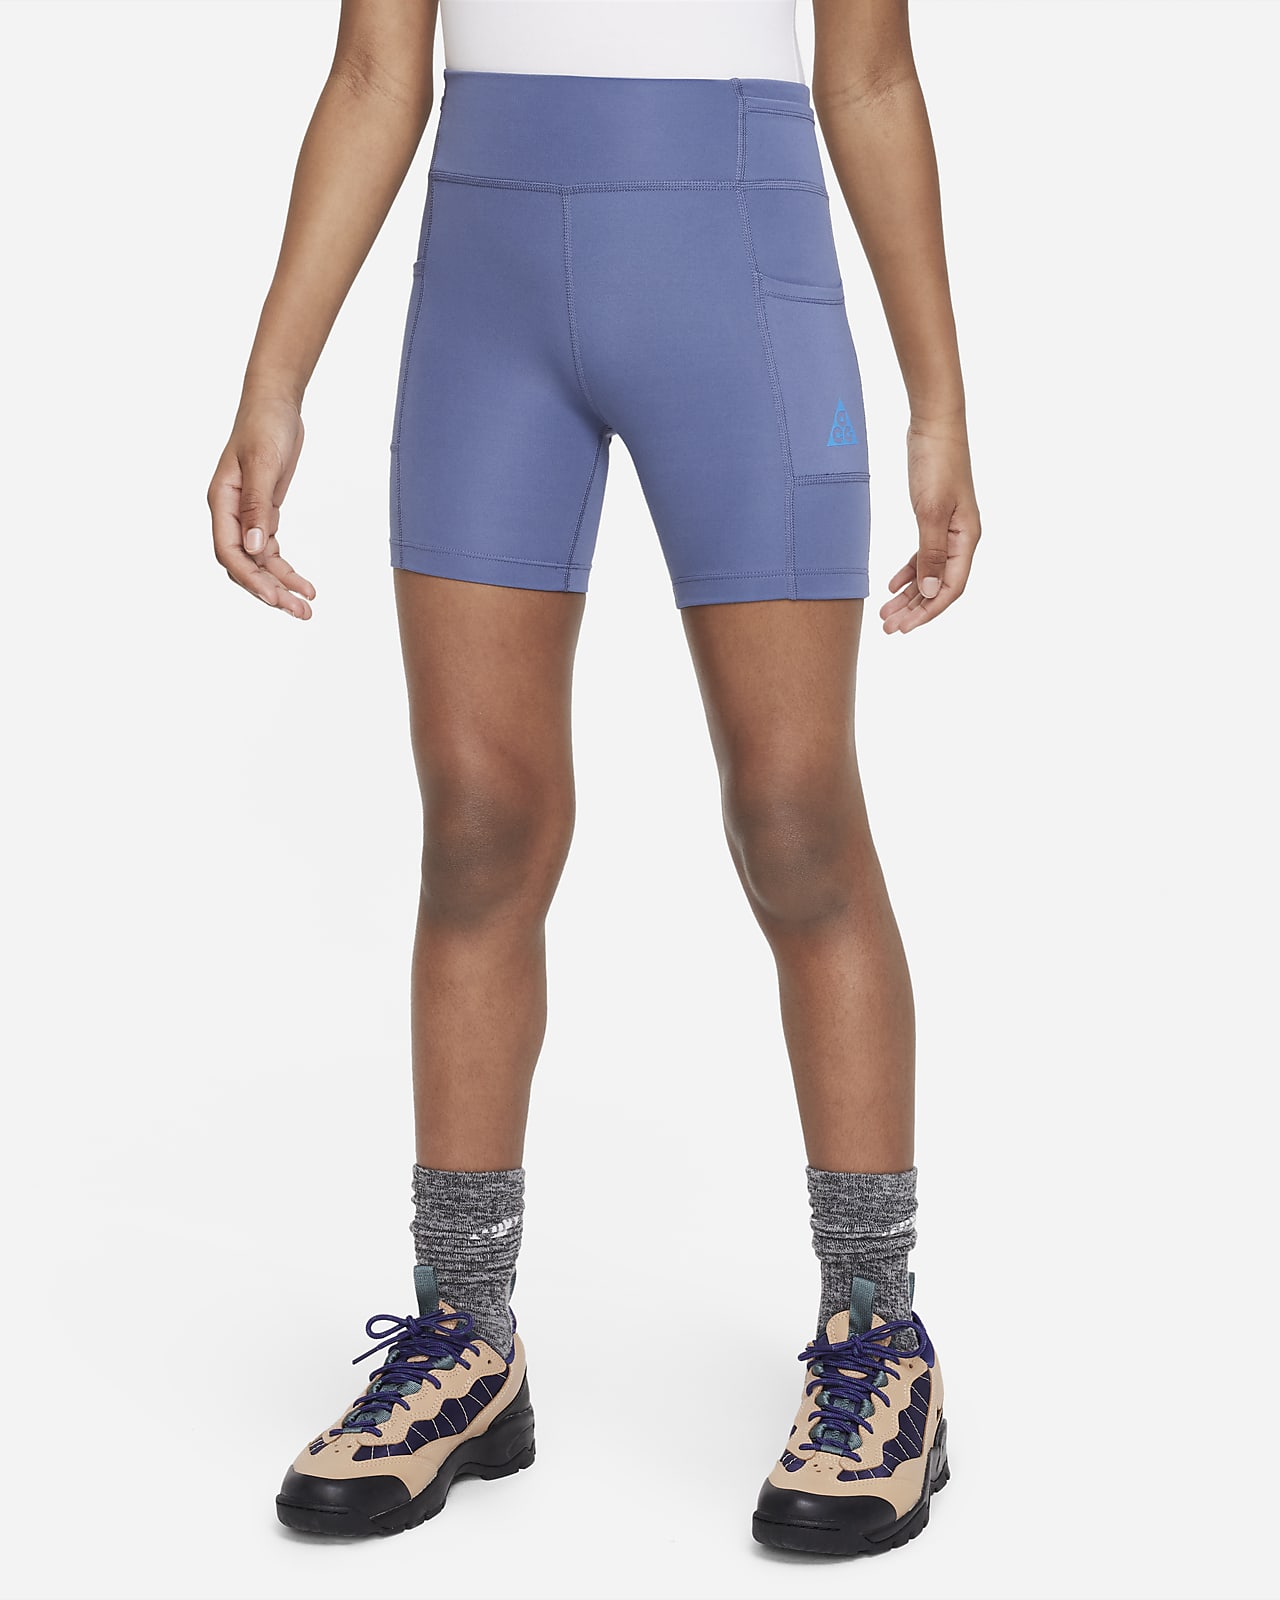 Nike ACG Repel One Older Kids' (Girls') Biker Shorts with Pockets. Nike CZ